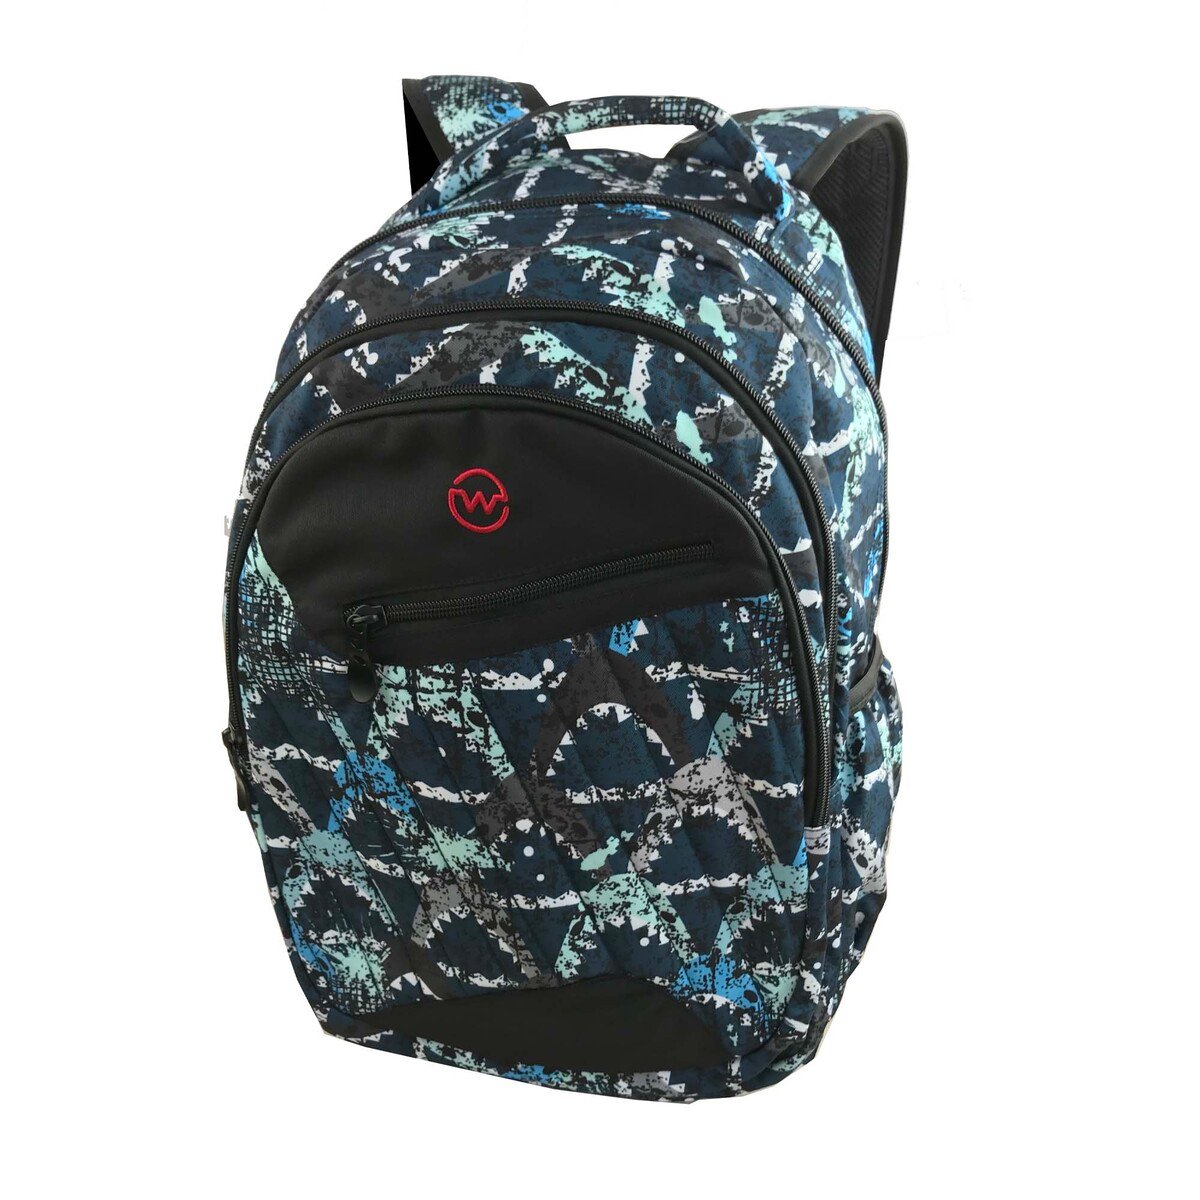 Wagon-R Printed School Backpack B2001-3 19"